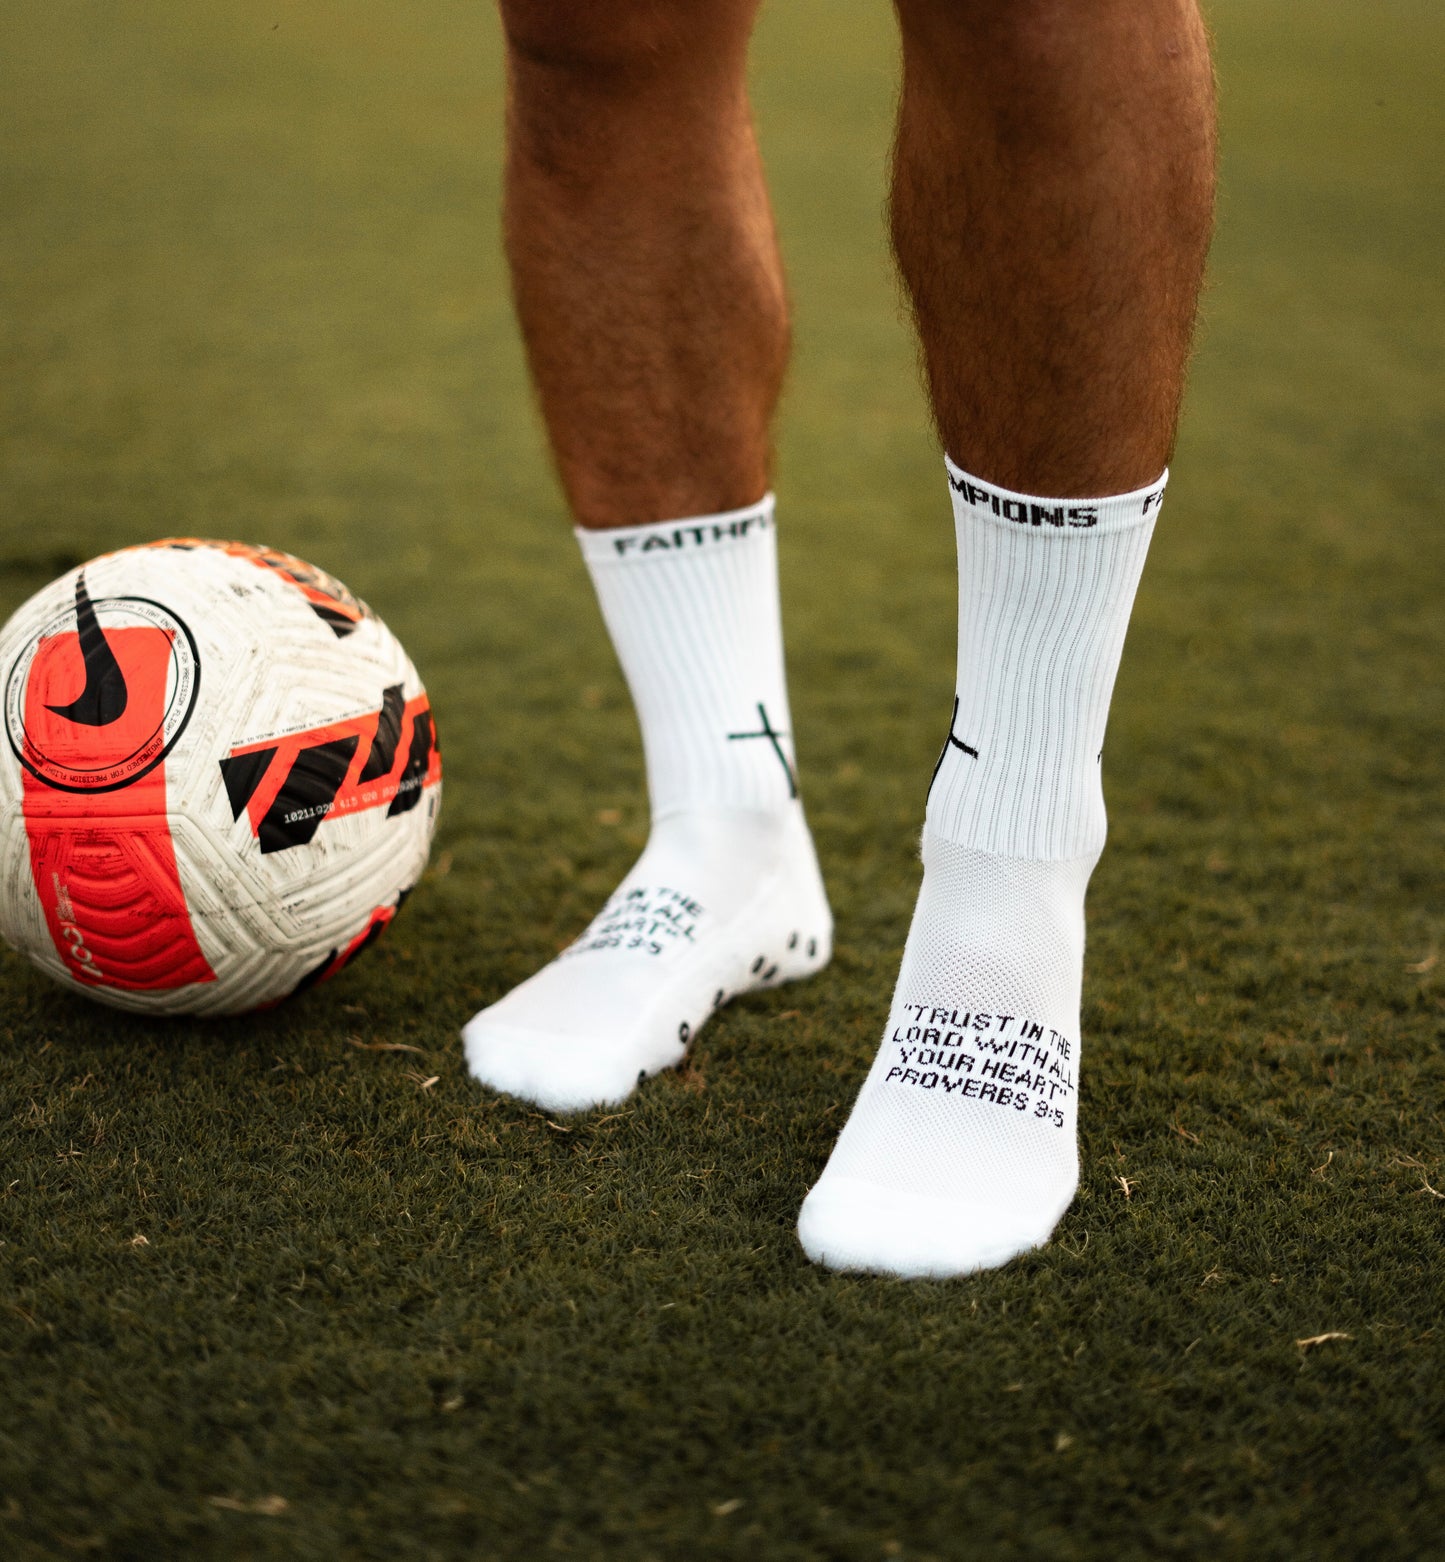 KRONIS Soccer Grip Socks